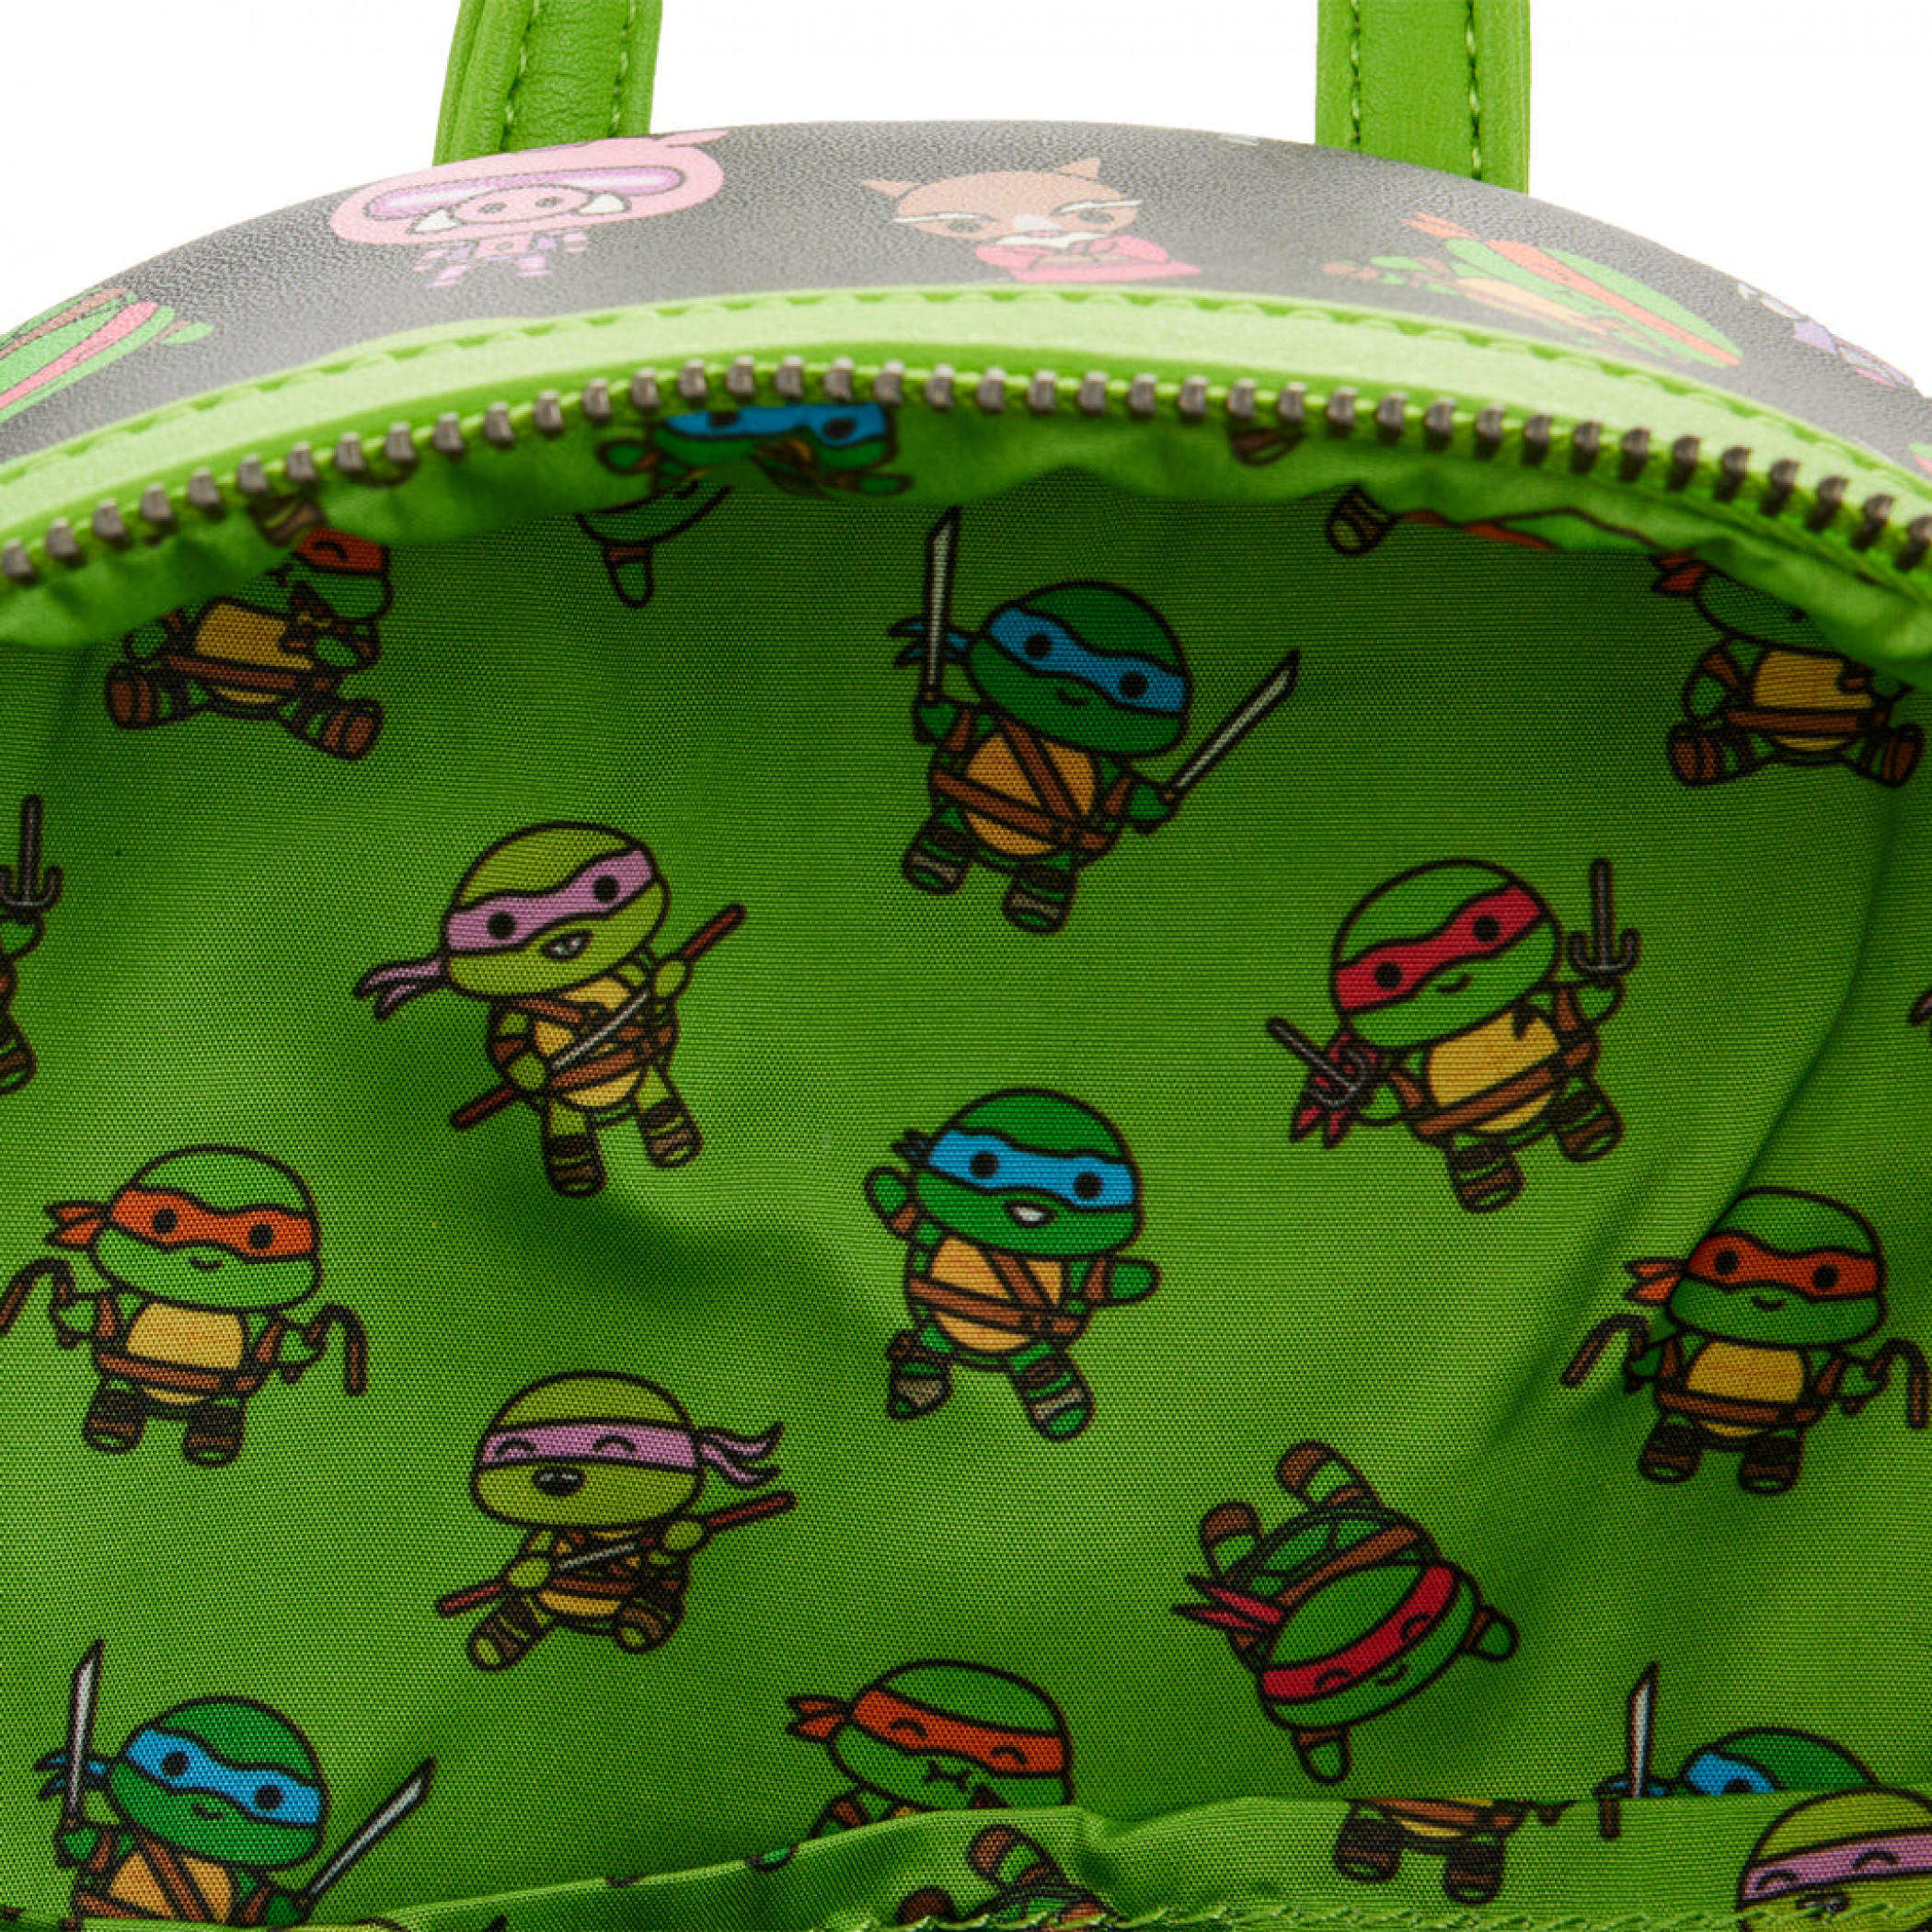 Teenage Mutant Ninja Turtles Chibi Mini Backpack by Loungelfy